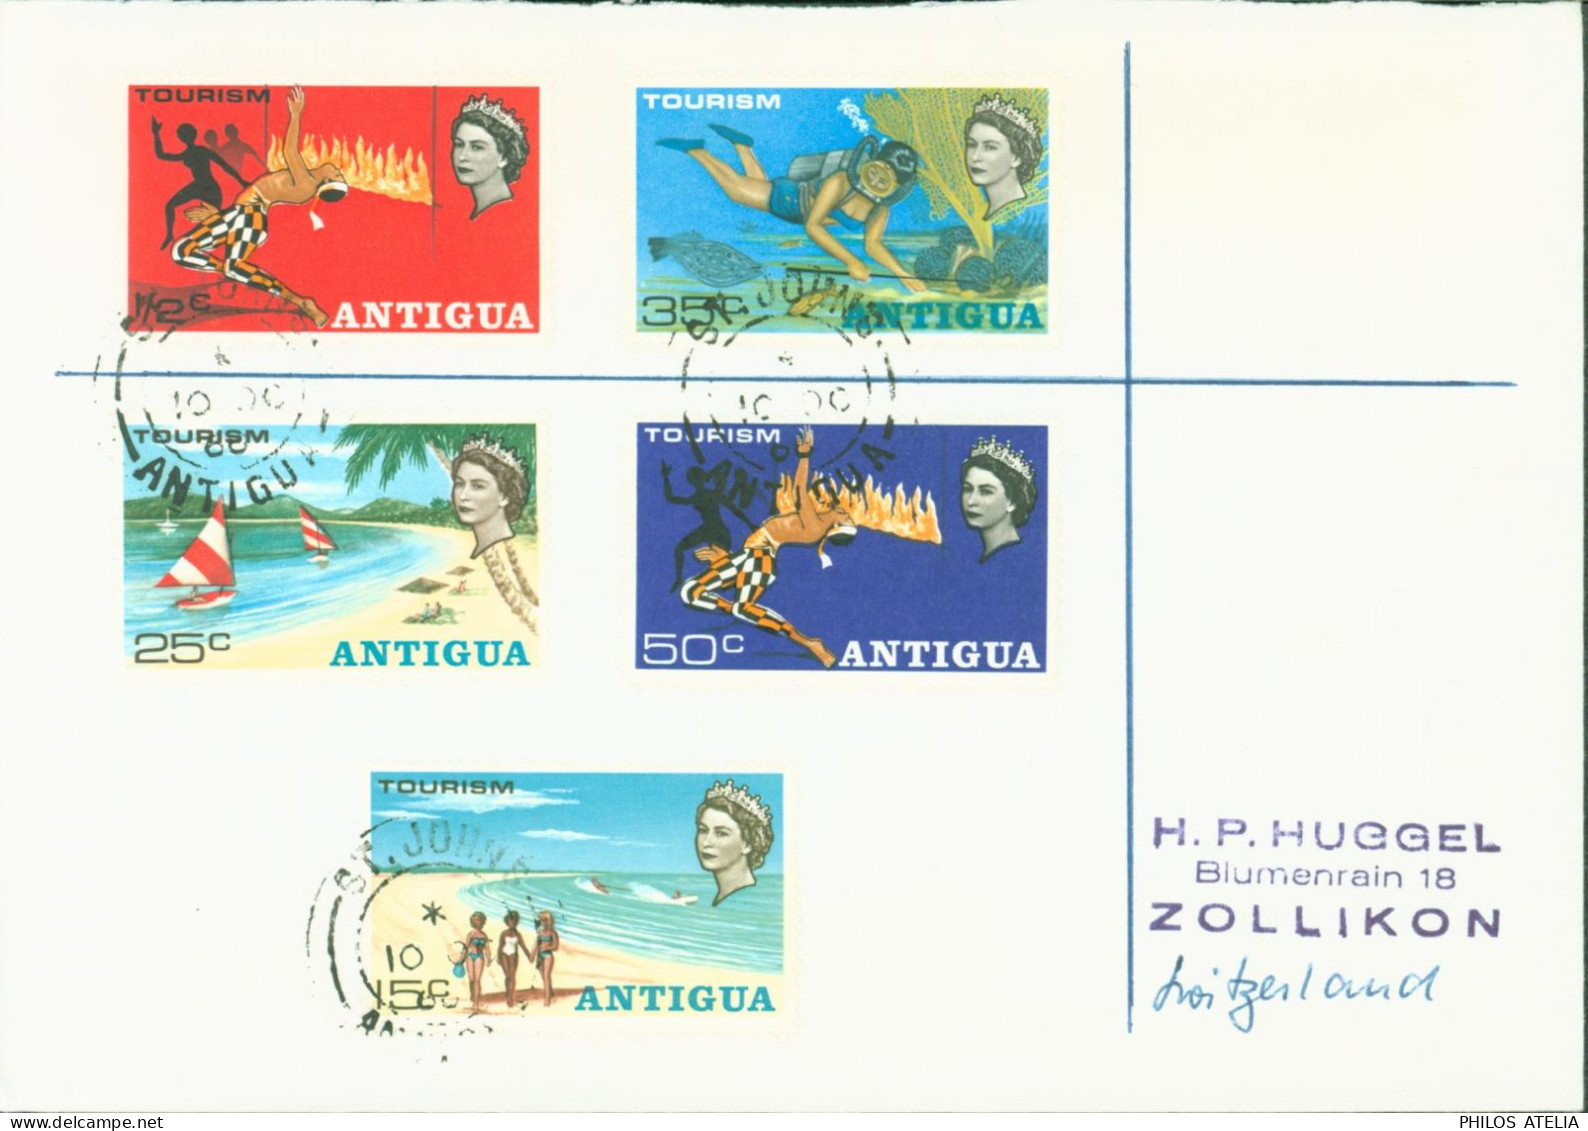 Commonwealth Antigua YT 194 à 198 Tourisme Elizabeth II CAD St Johns Antigua 10 OC 1968 - 1960-1981 Autonomia Interna